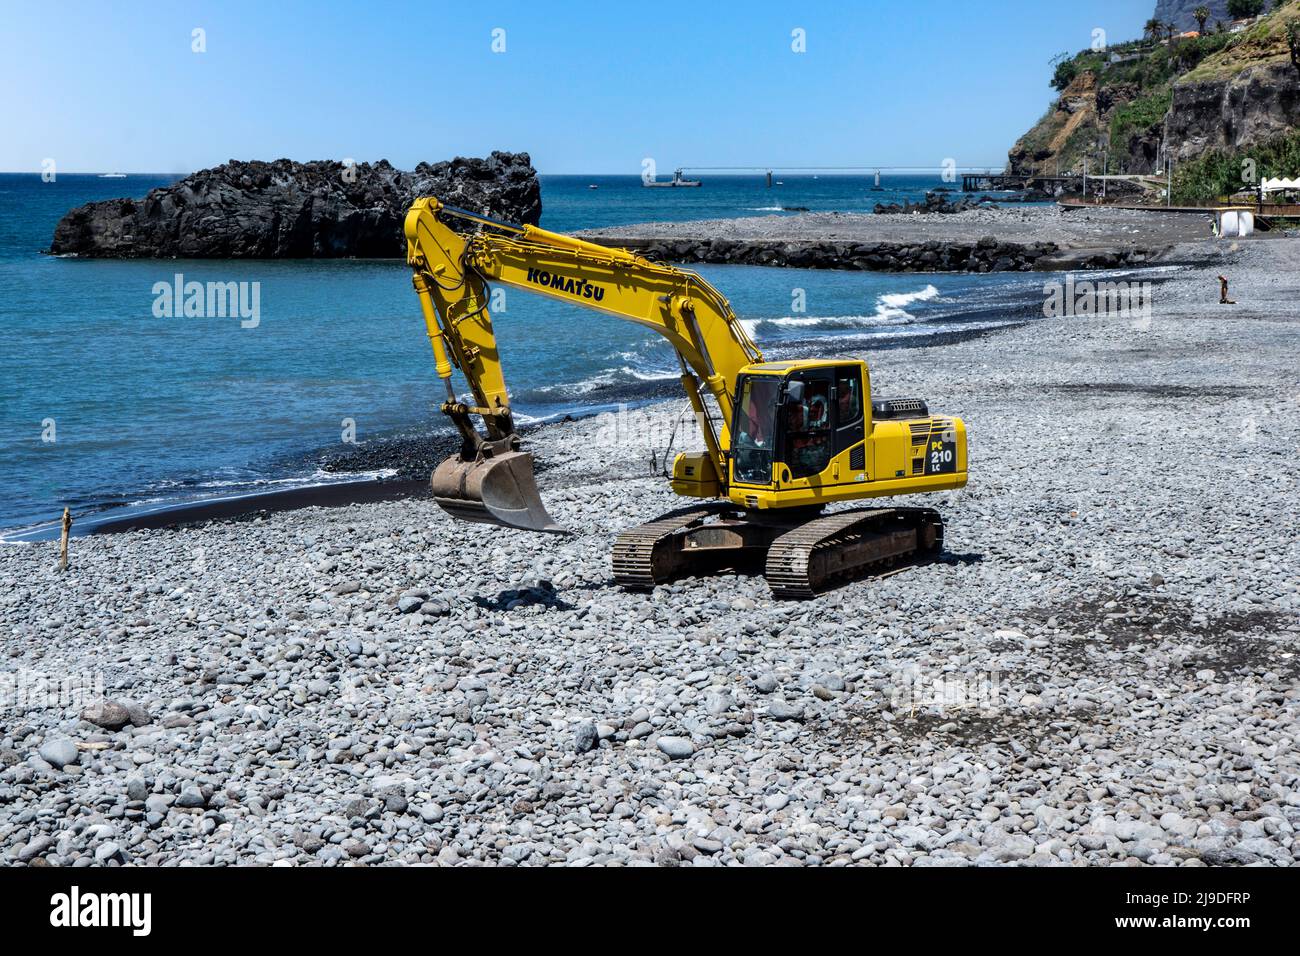 A Komatsu DC210 excavator flattening stones on the seafront of San Martinho, Madeira. Stock Photo